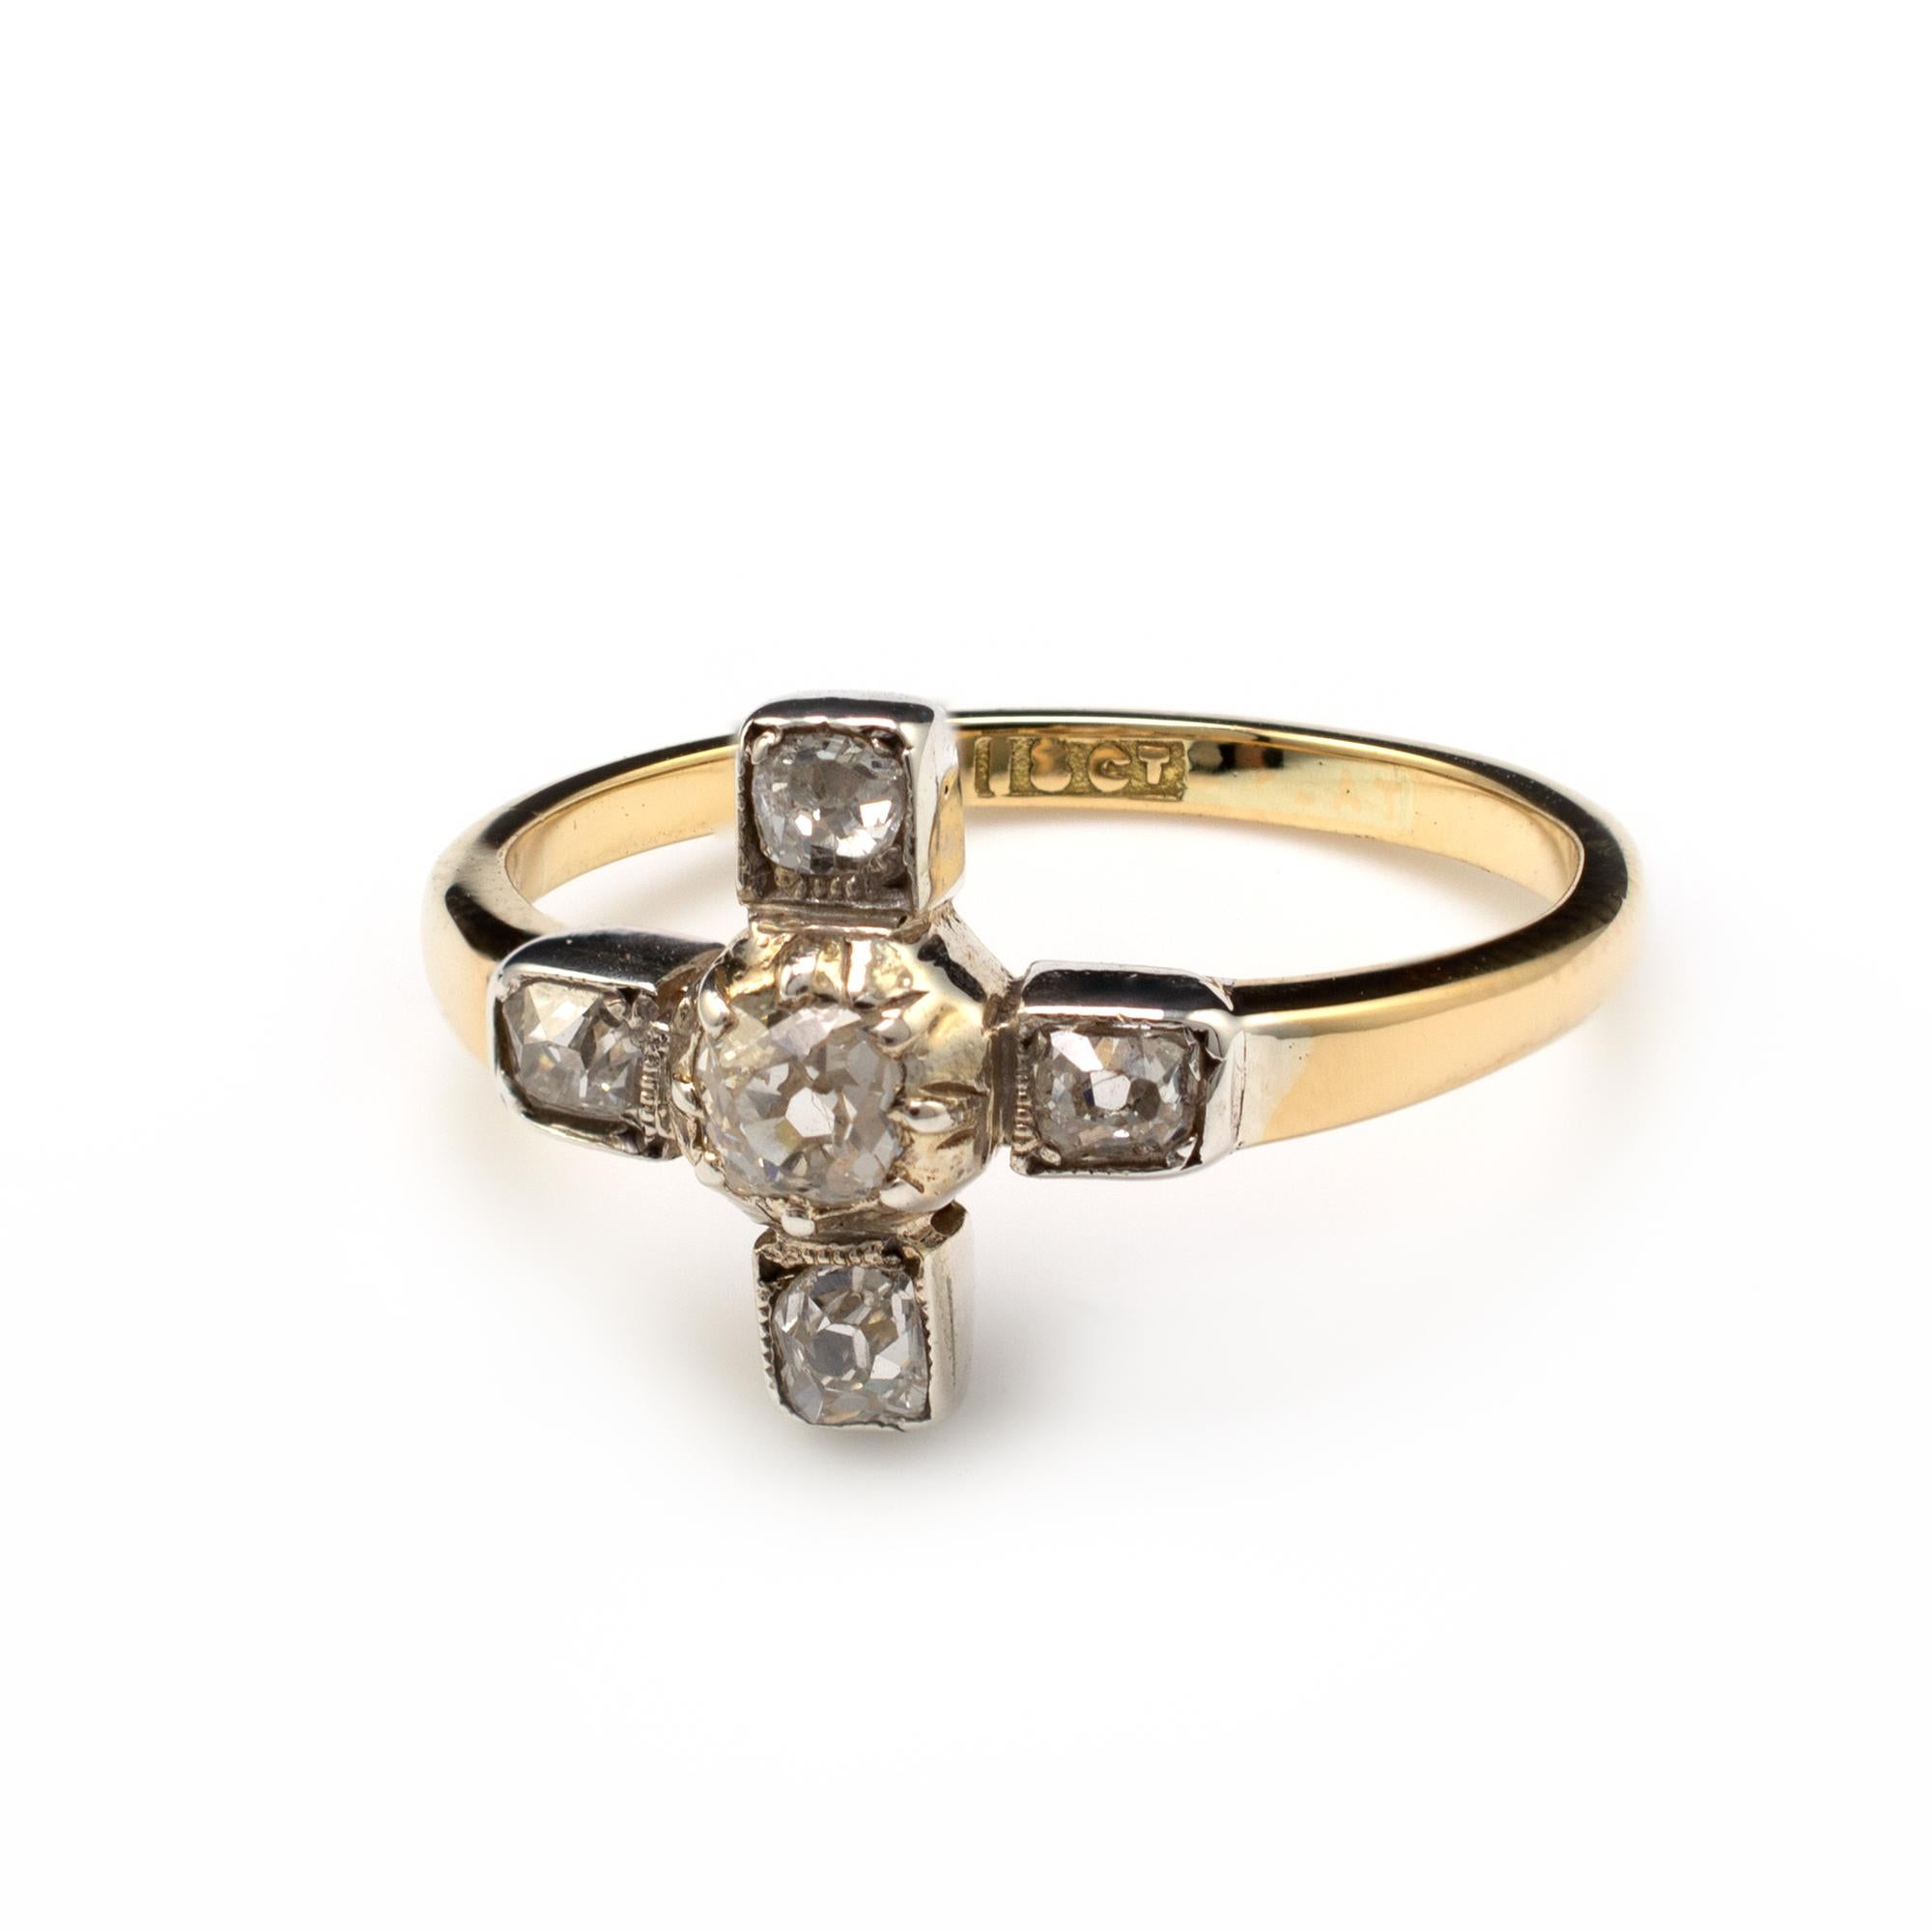 Old Mine Cut Art Deco Diamond Ring 18 Karat White Gold, circa 1920s